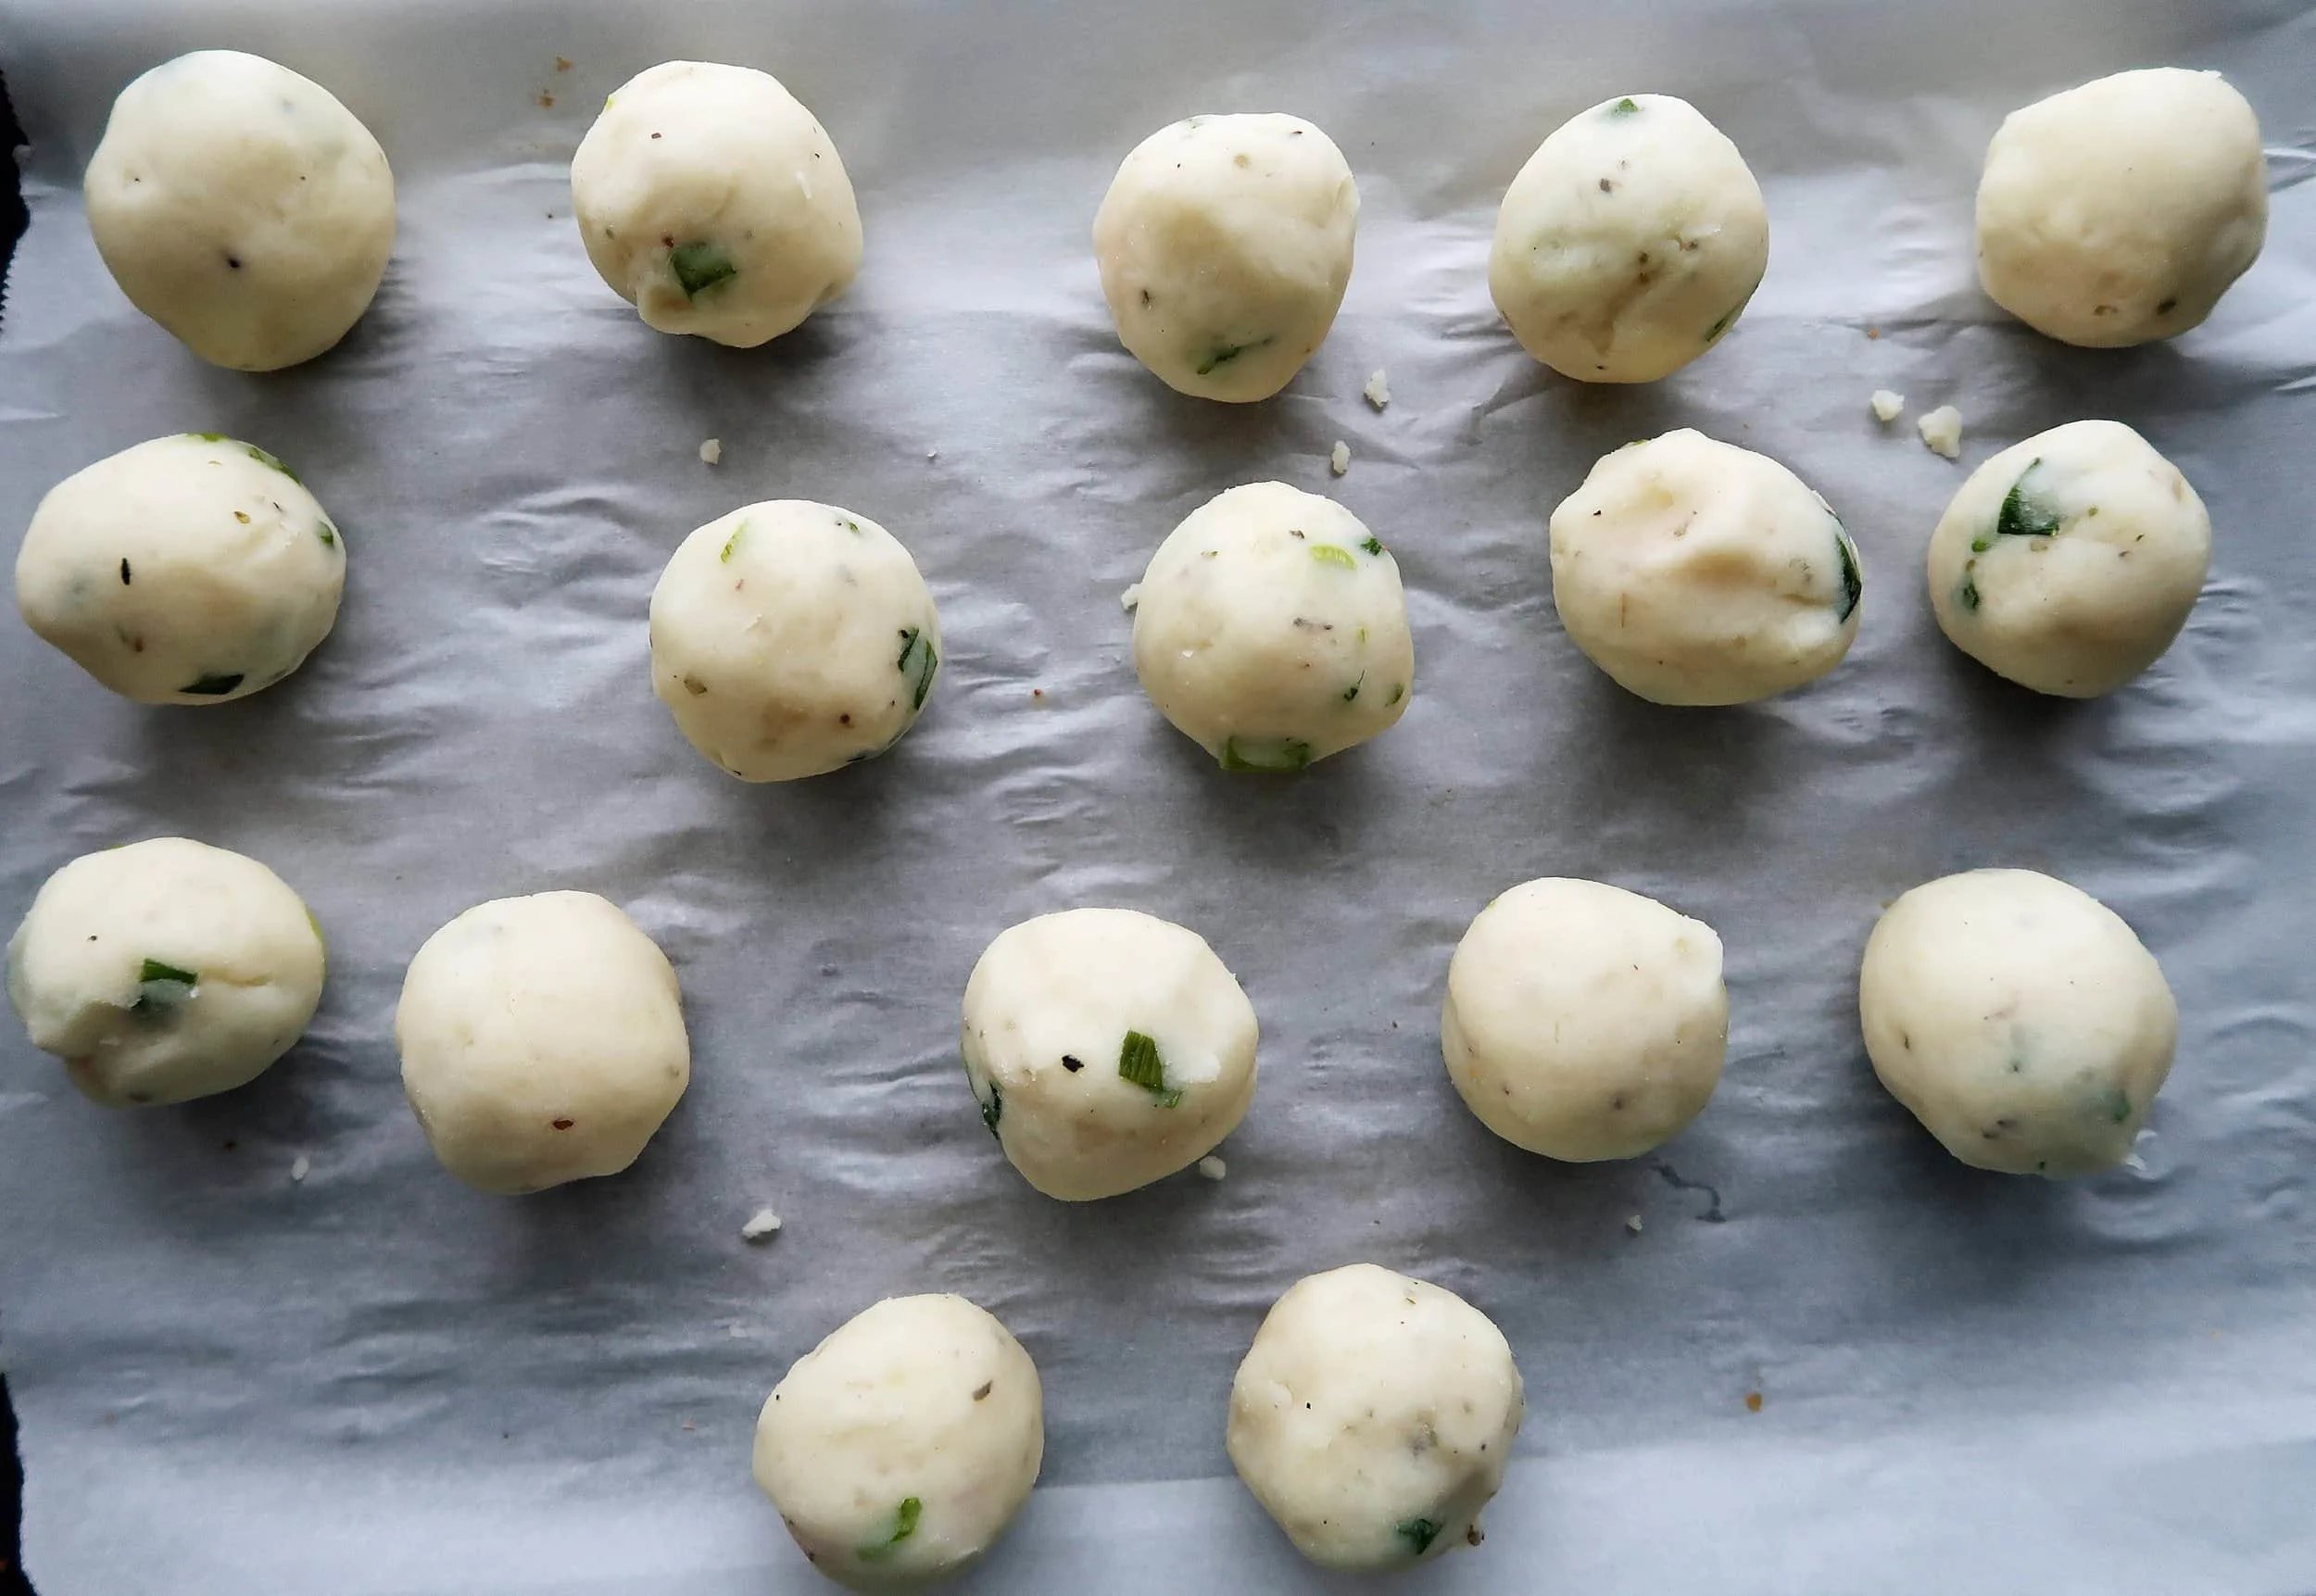 Balls of mashed potato on a baking sheet.